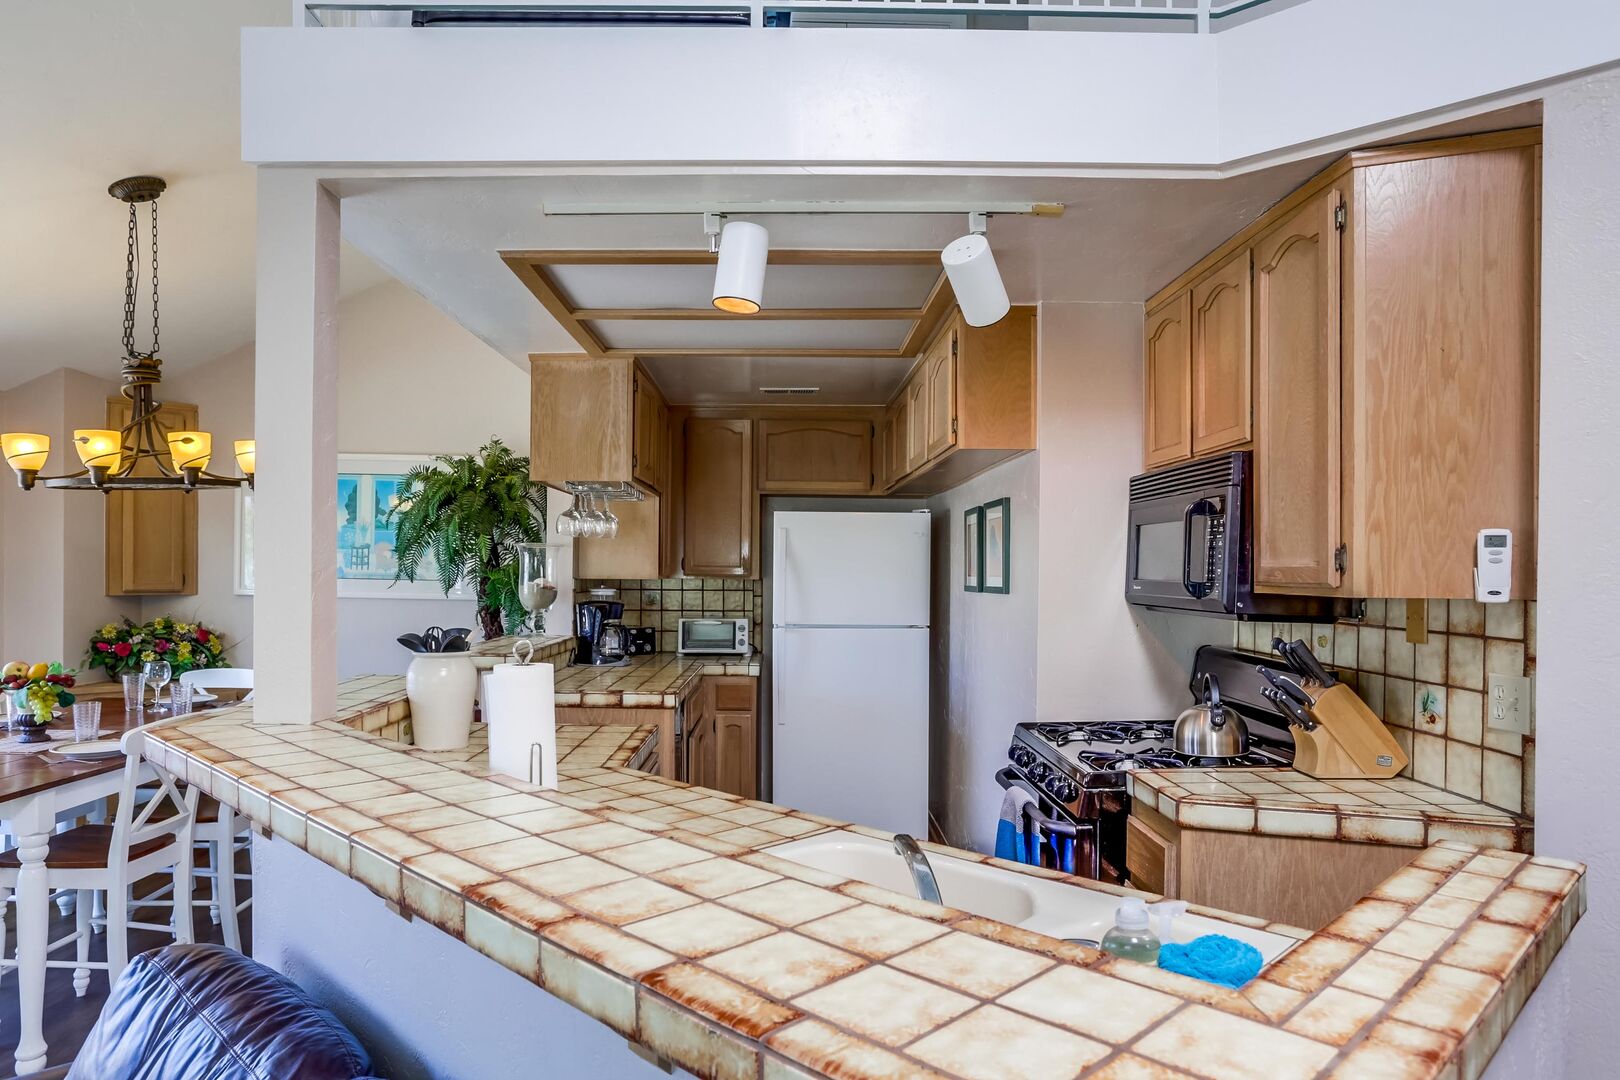 Kitchen with refrigerator, toaster, microwave, overhead lighting, sink, blender